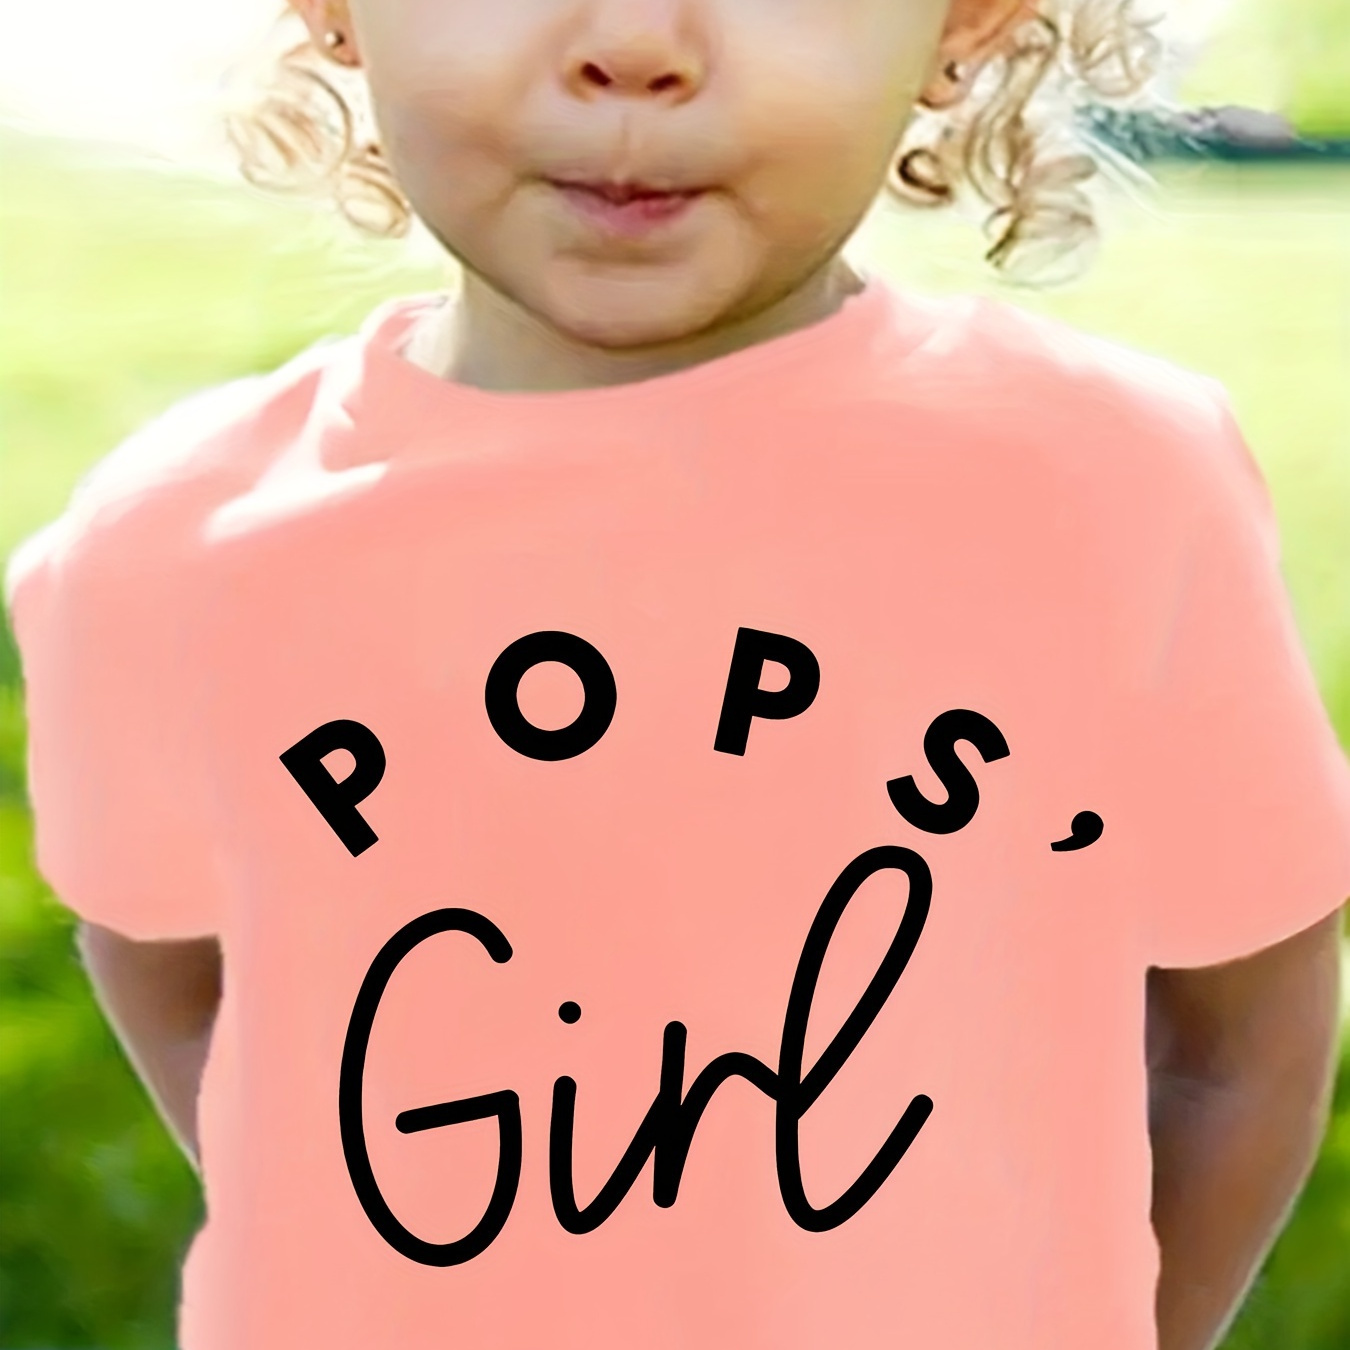 

pops, Girl" Letter Printed Girls T-shirt, Cute Casual Girls' Summer Round Neck Short Sleeve Top